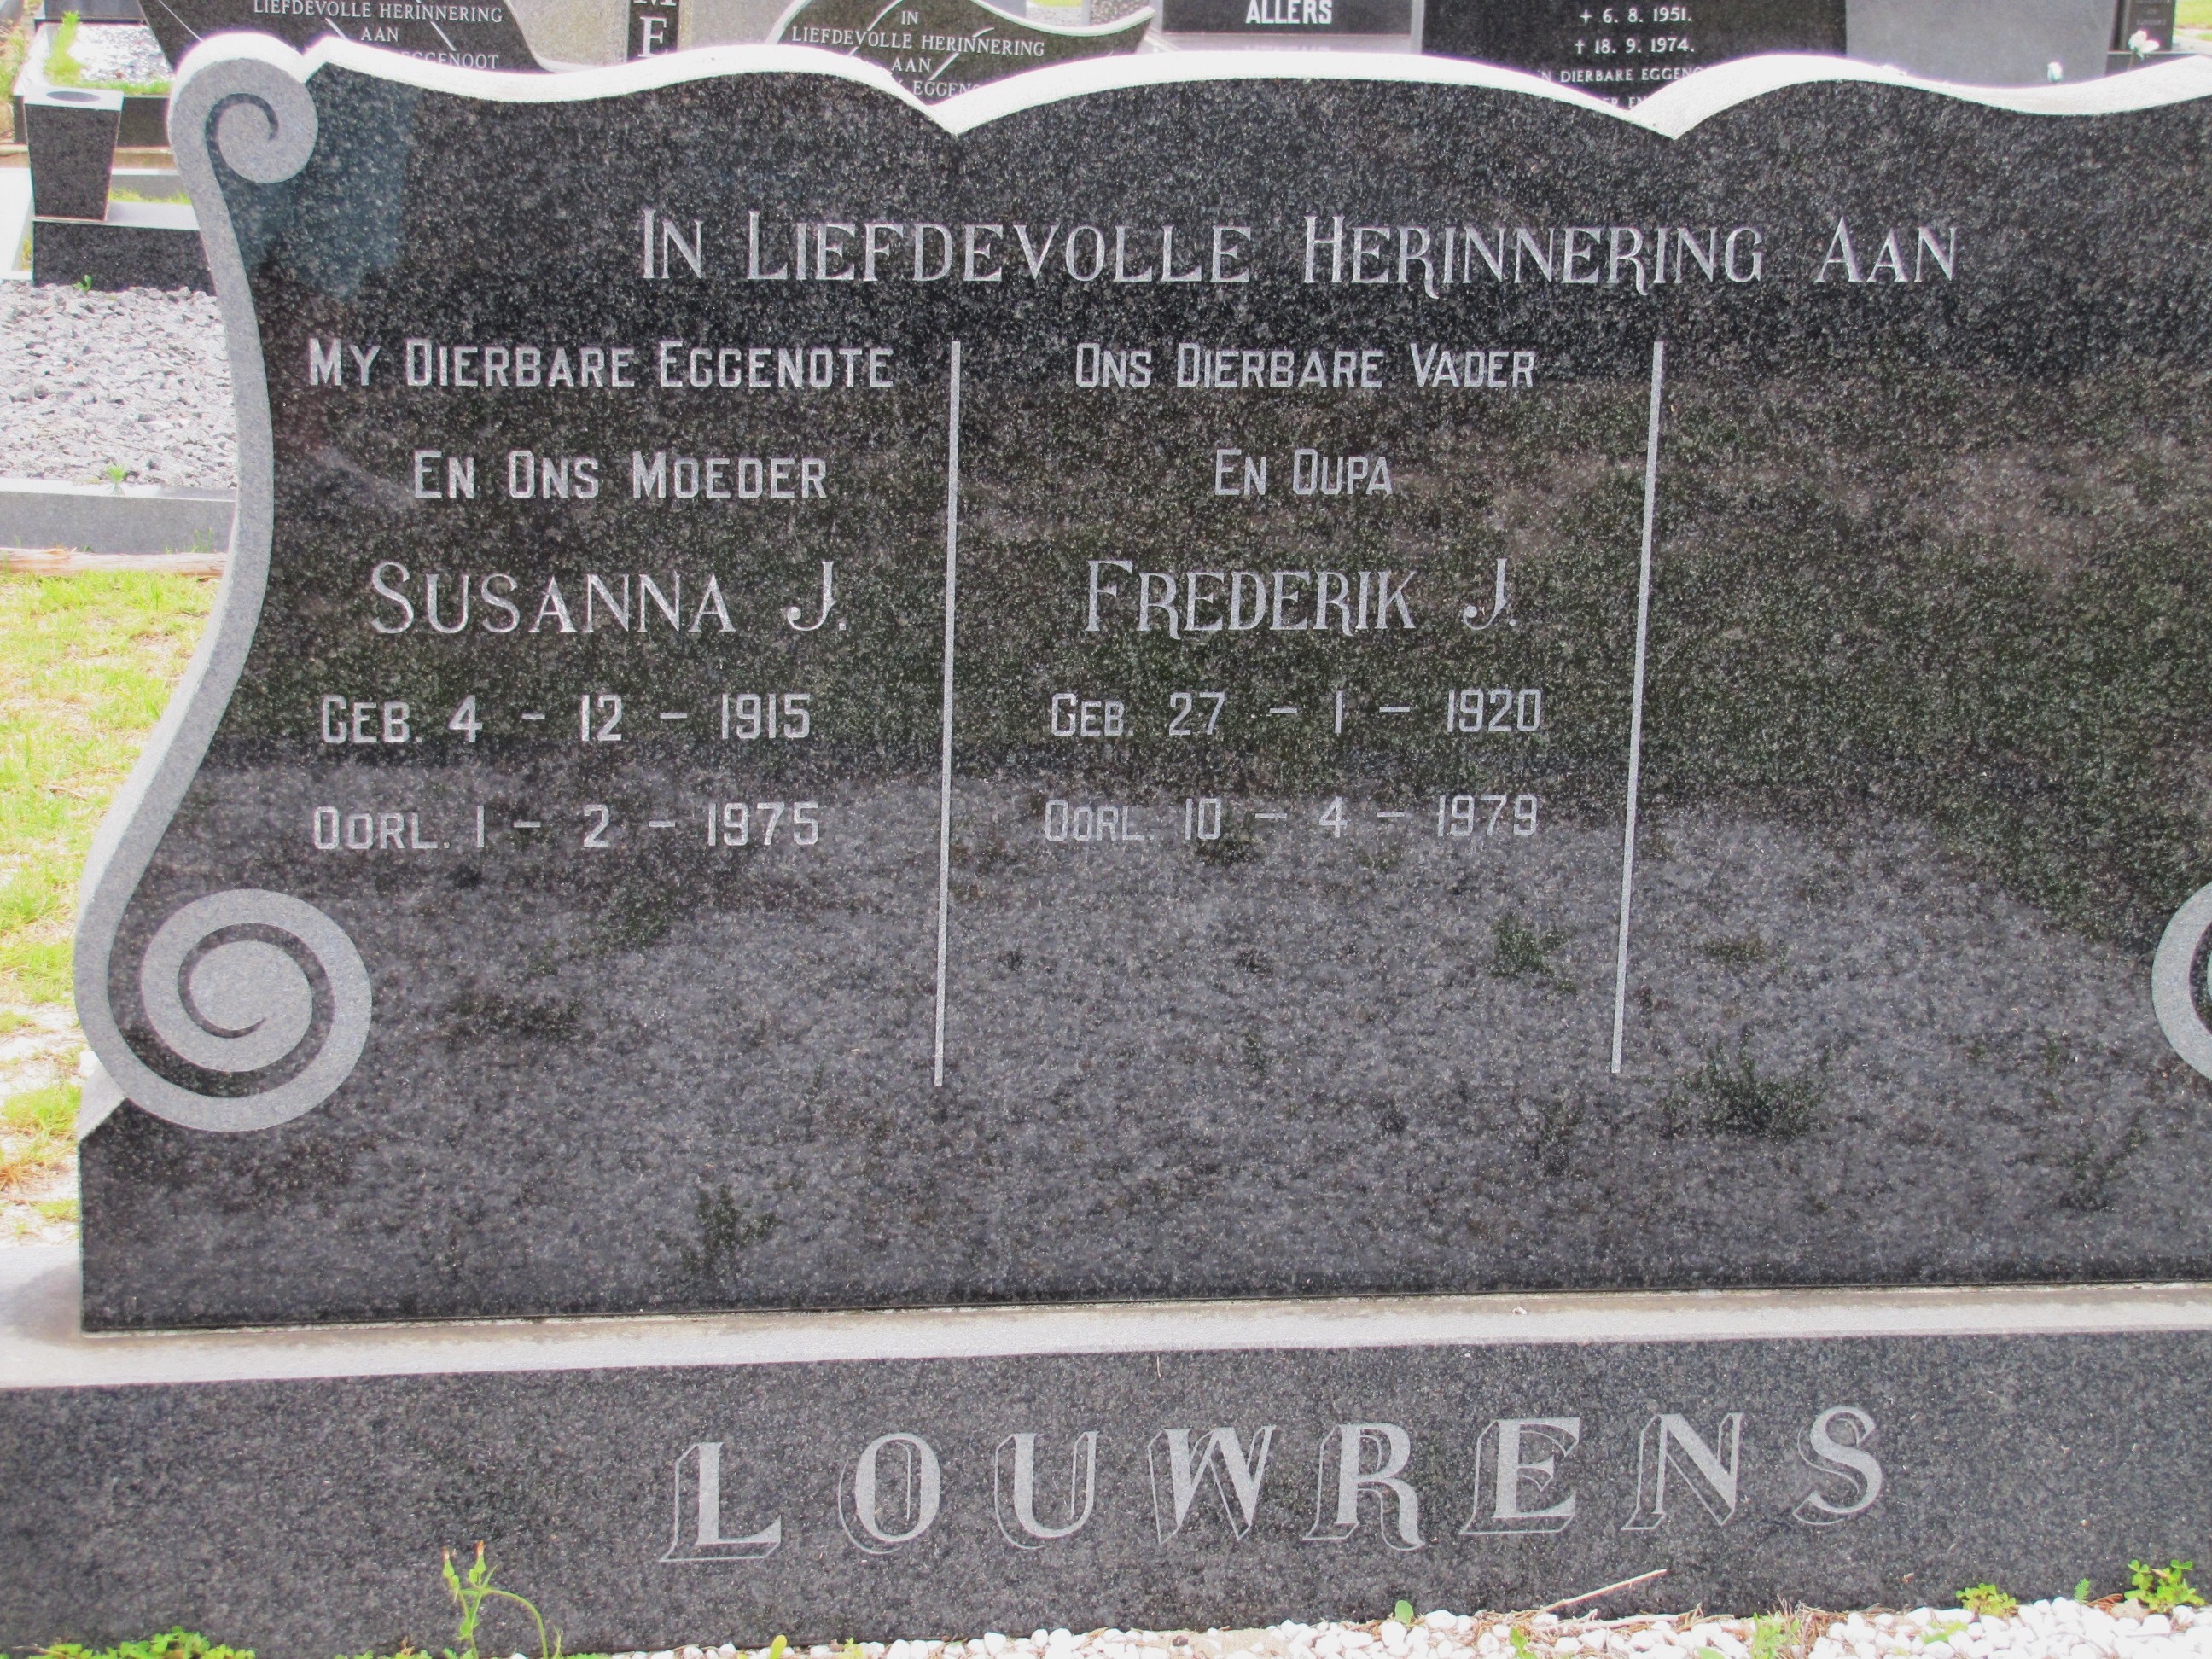 LOUWRENS Susanna J. 1915-1975 & Frederick J. 1920-1979